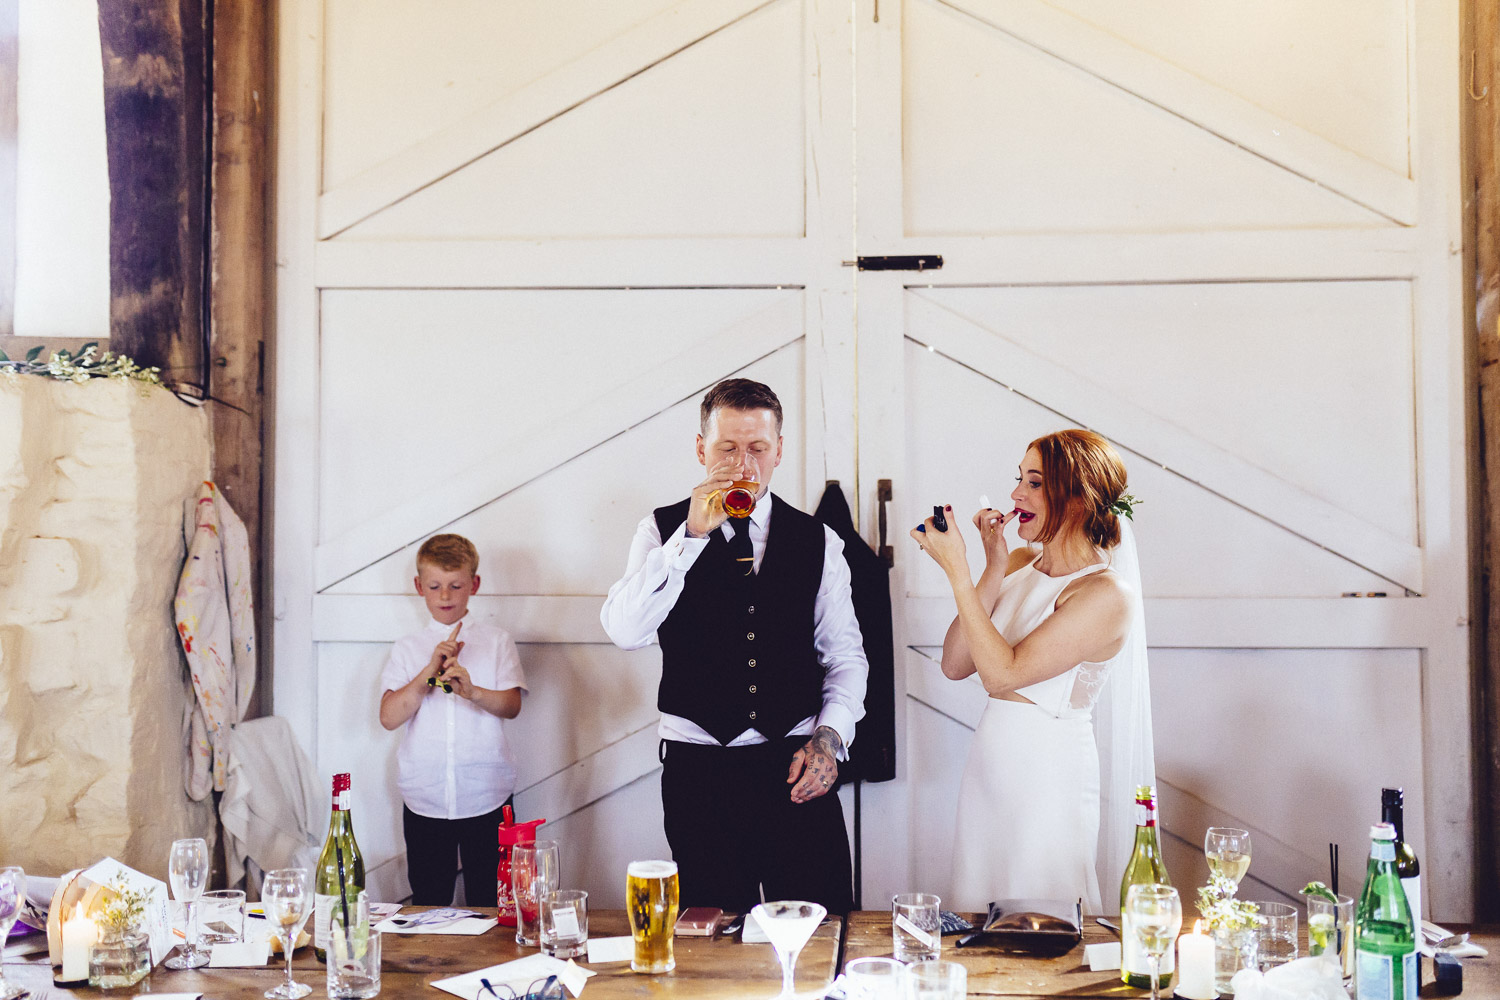 Becca & Paul- Priors Tithe Barn -Midland wedding photographer - creative wedding photography0036.jpg